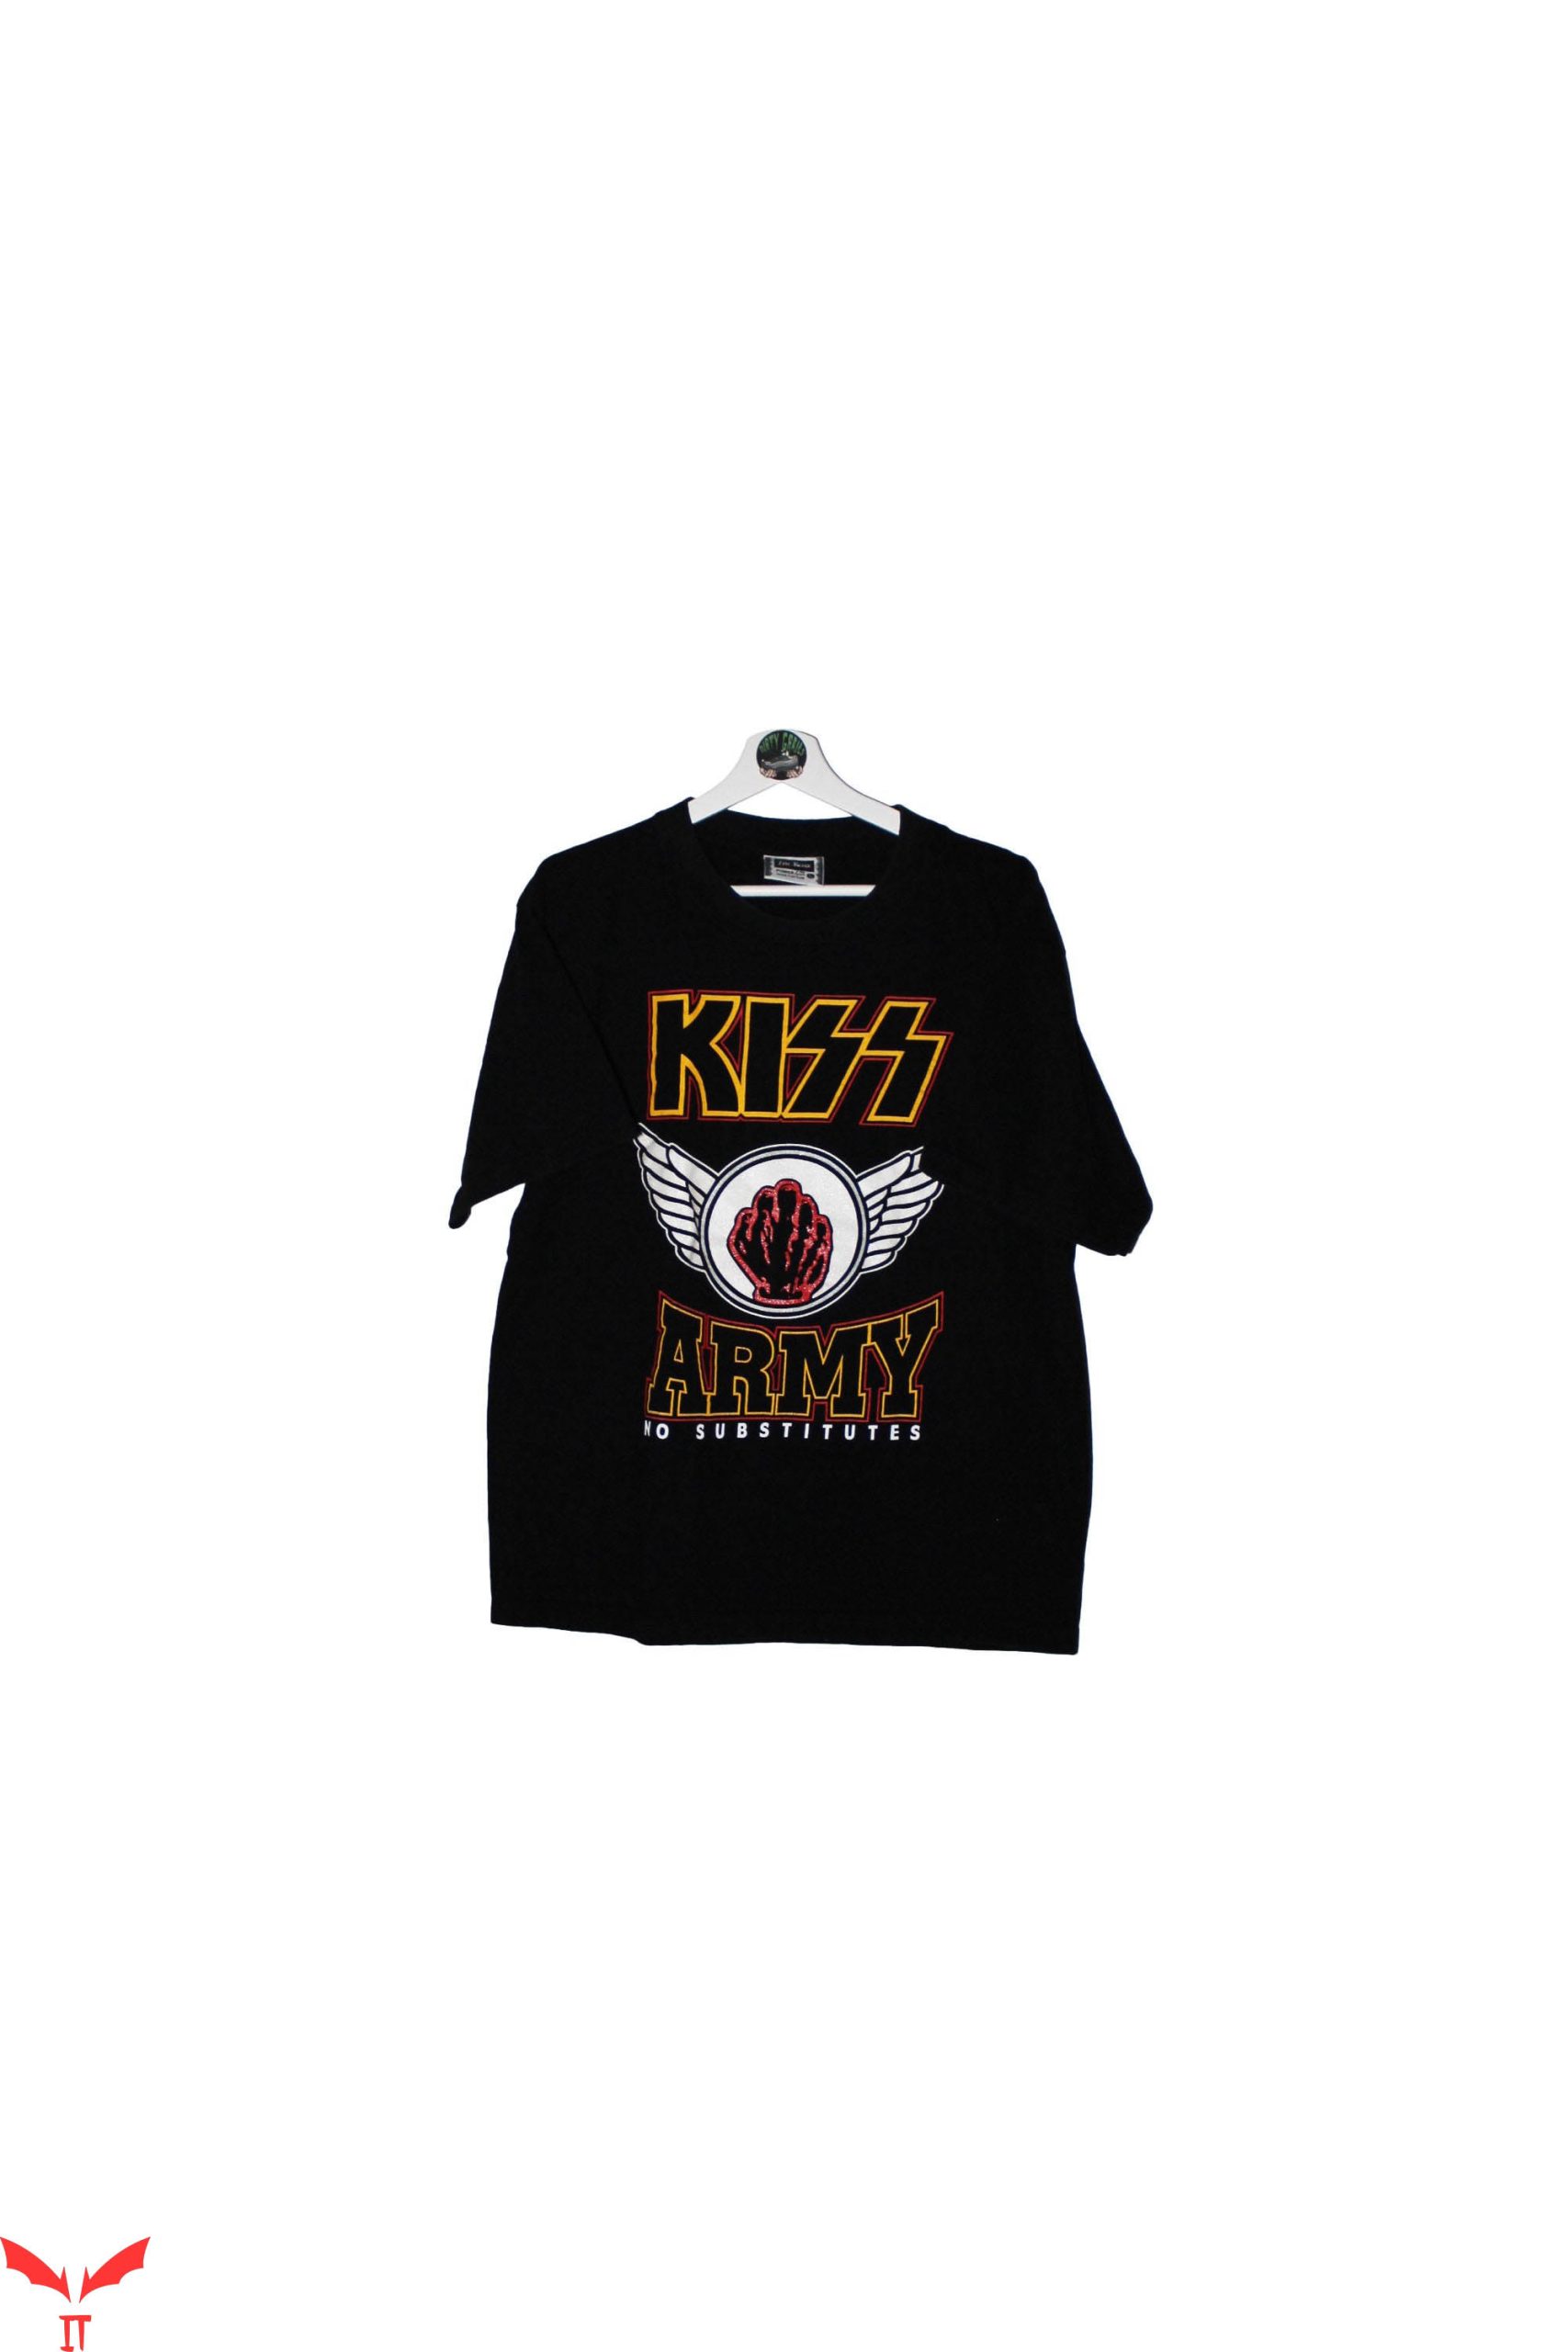 Kiss Vintage T-Shirt Vintage Kiss Army Destroyer 1996 Tour